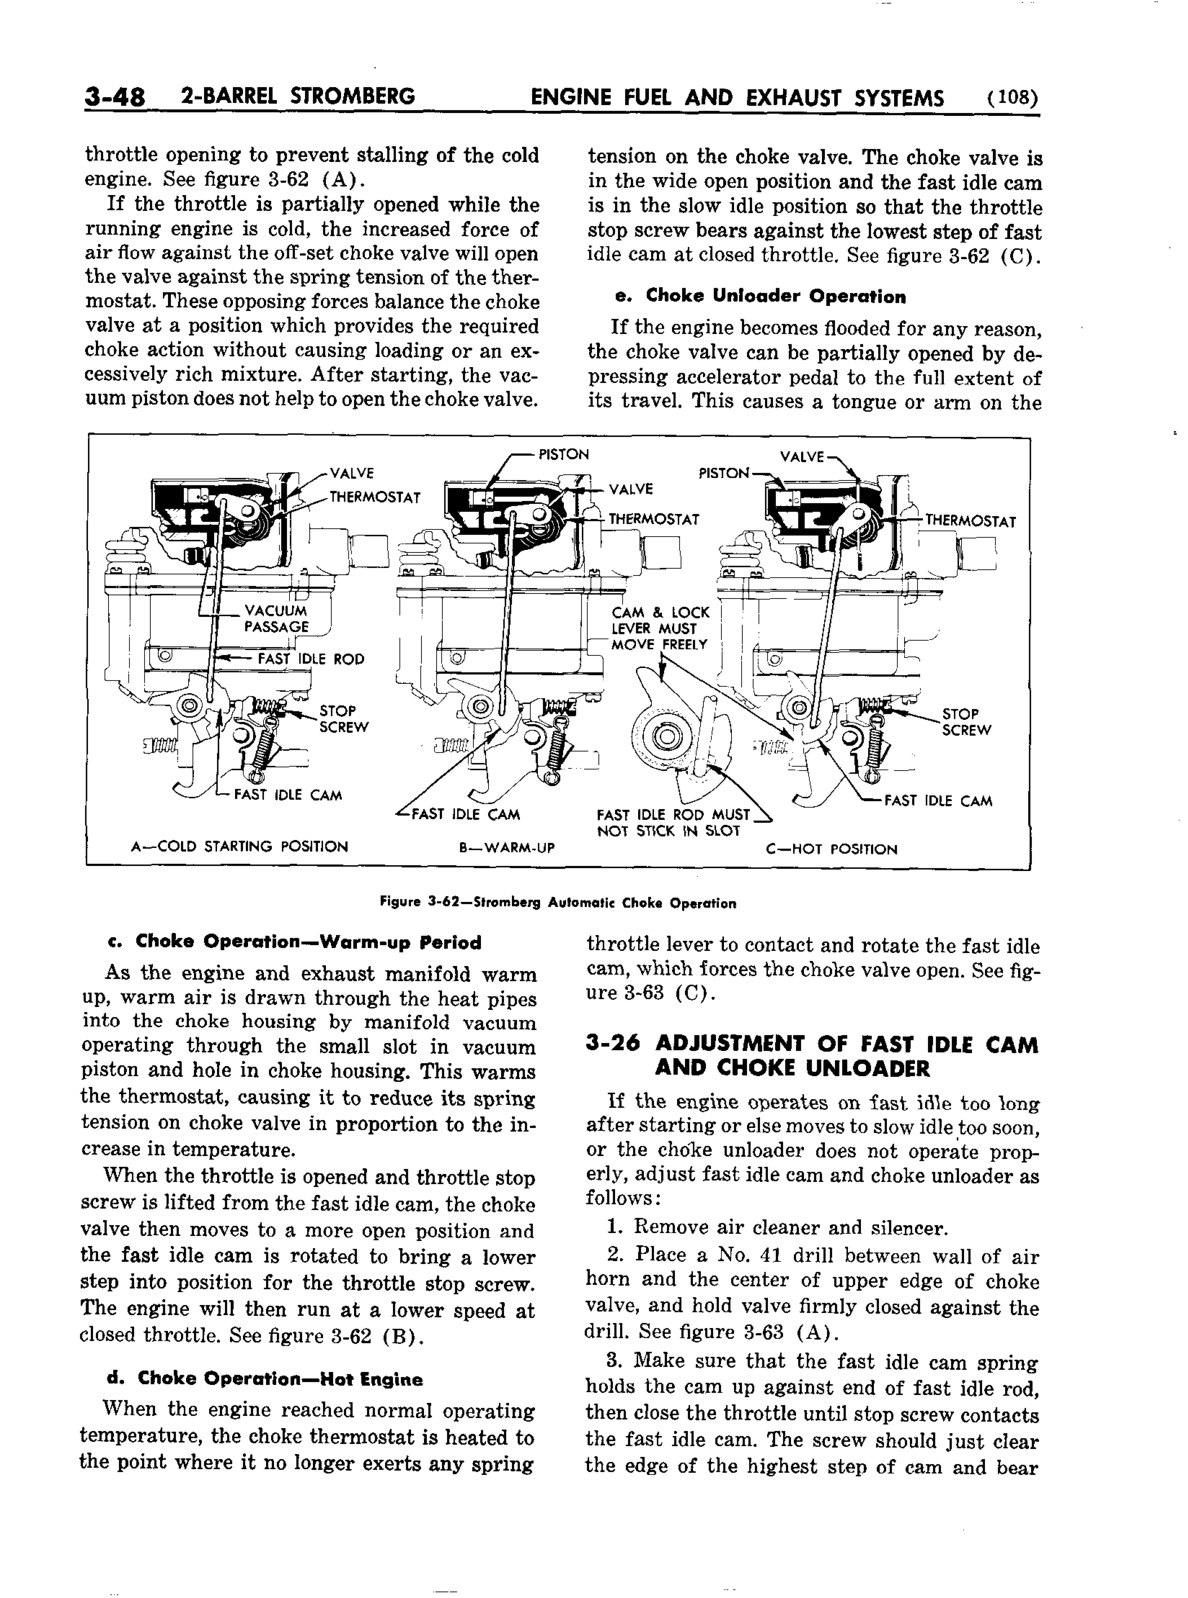 n_04 1953 Buick Shop Manual - Engine Fuel & Exhaust-048-048.jpg